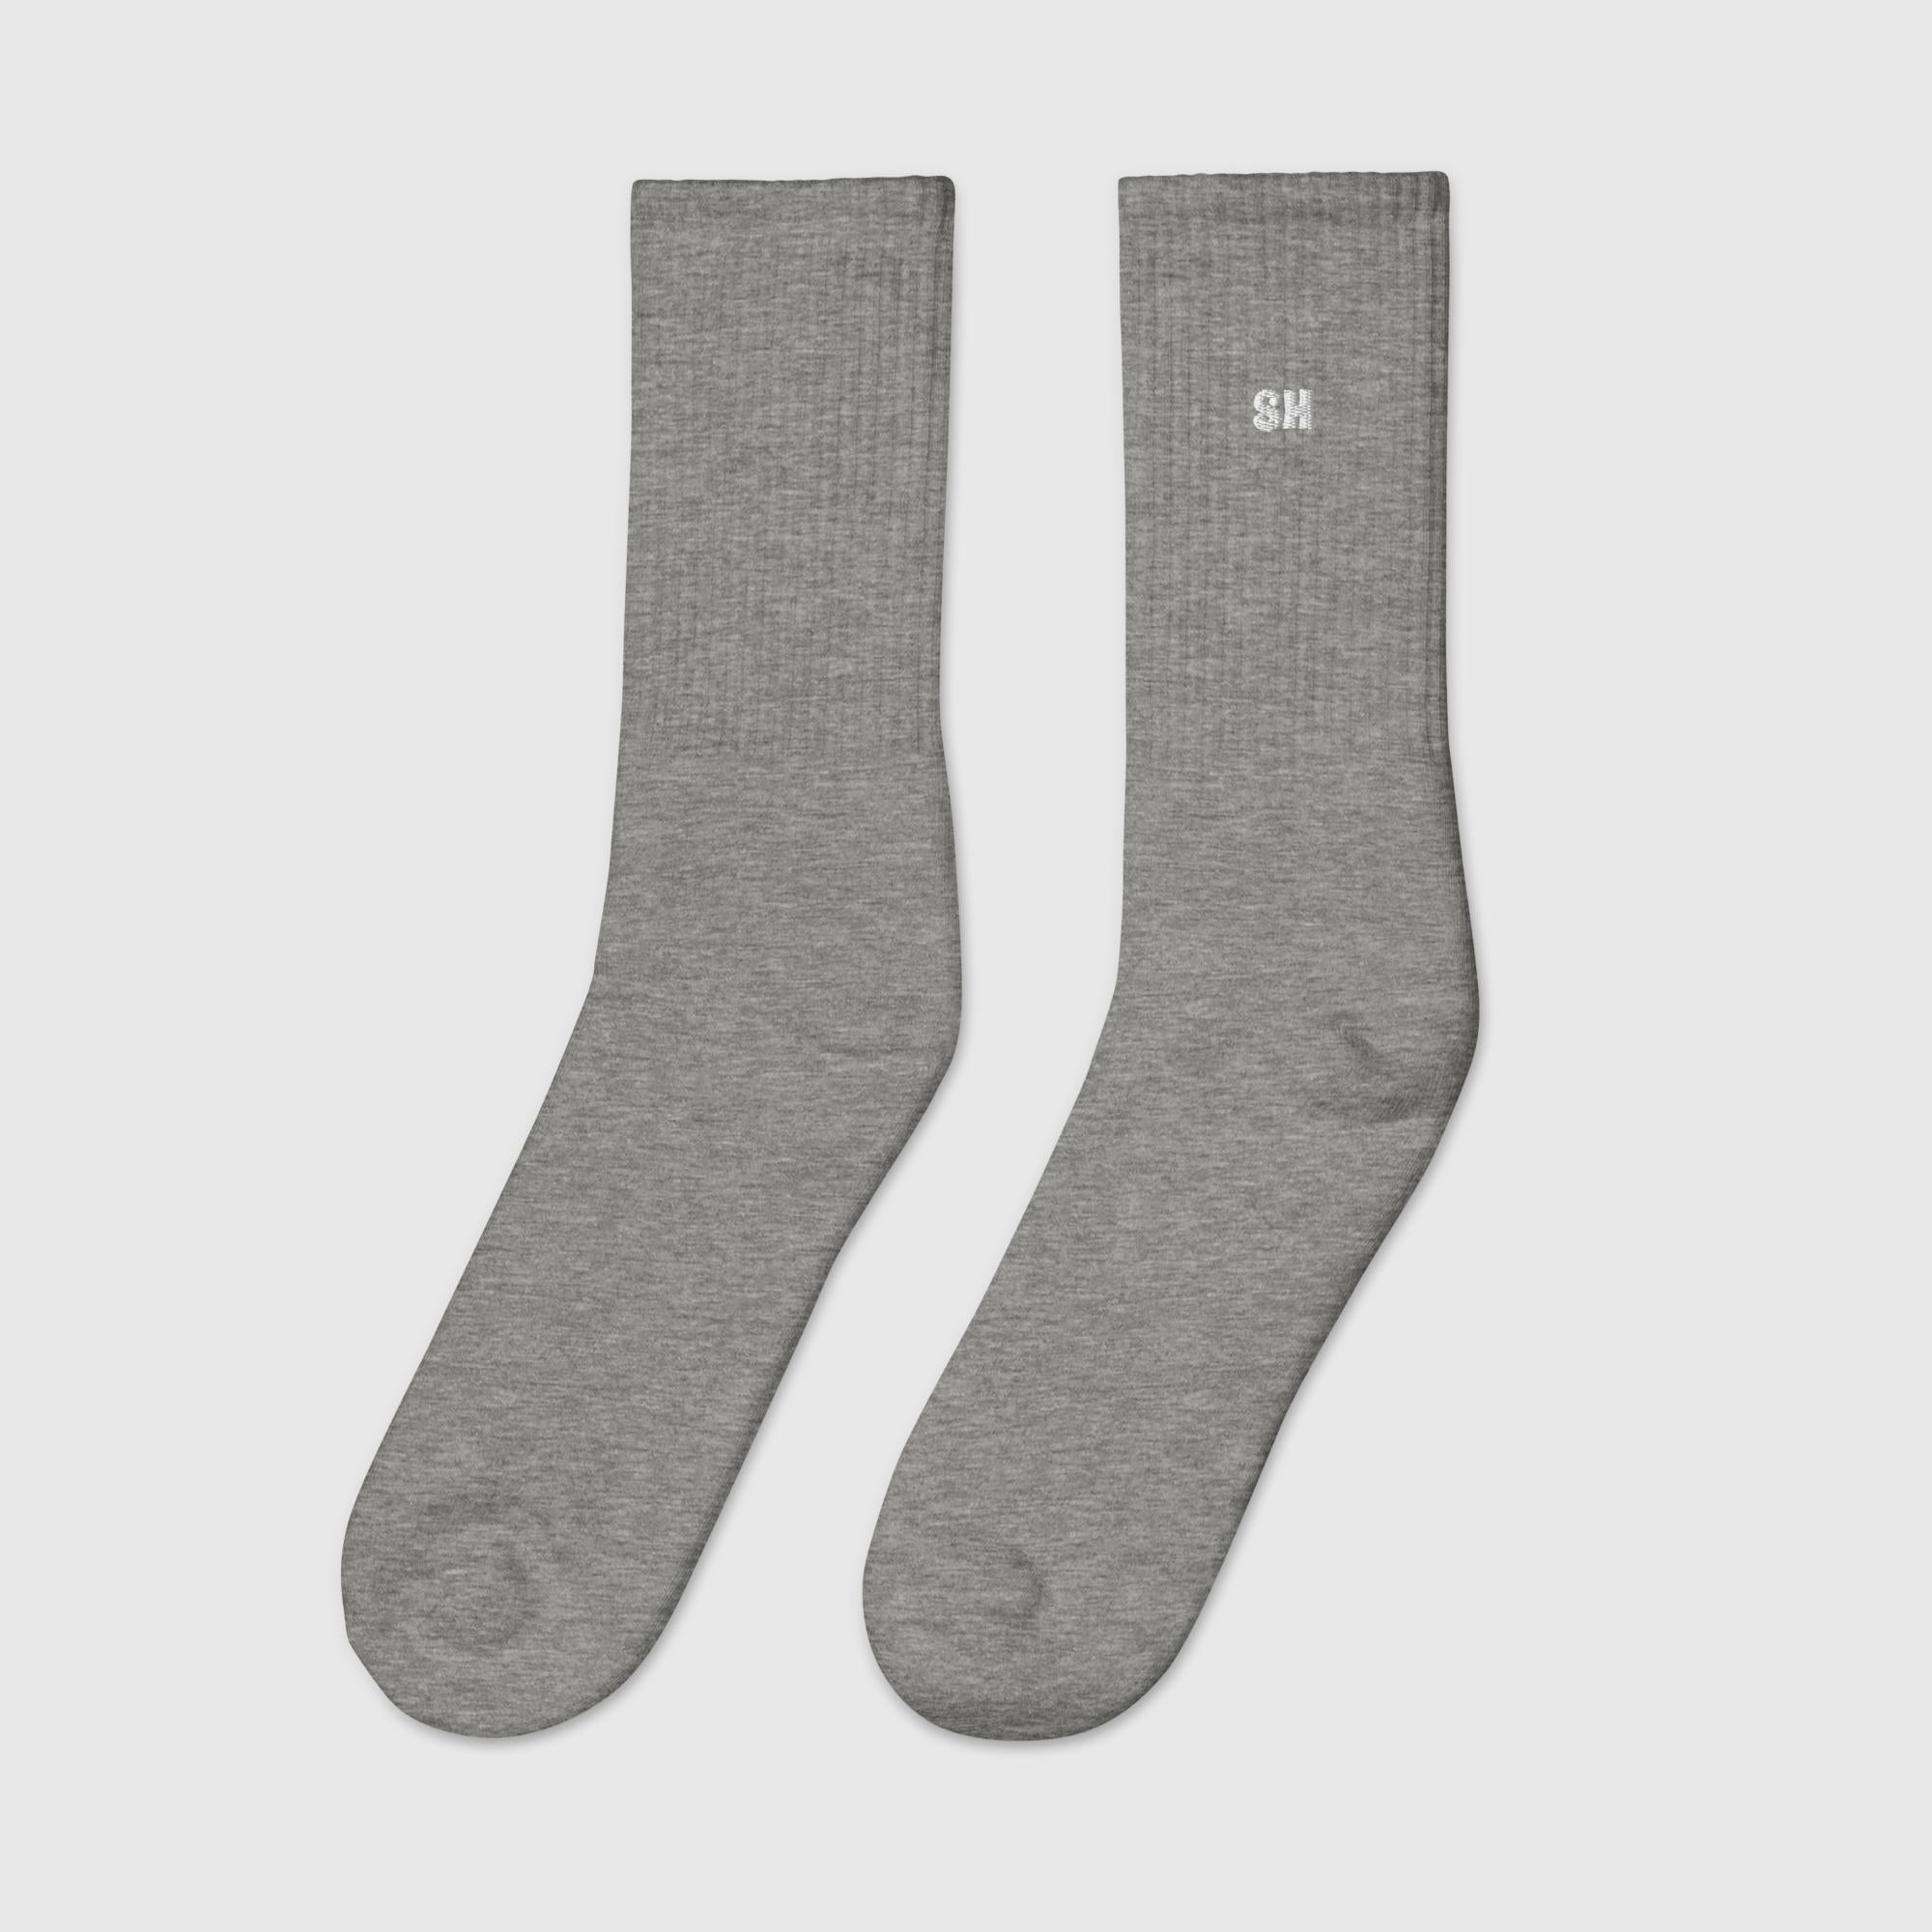 Embroidered socks - Grey - Sunset Harbor Clothing